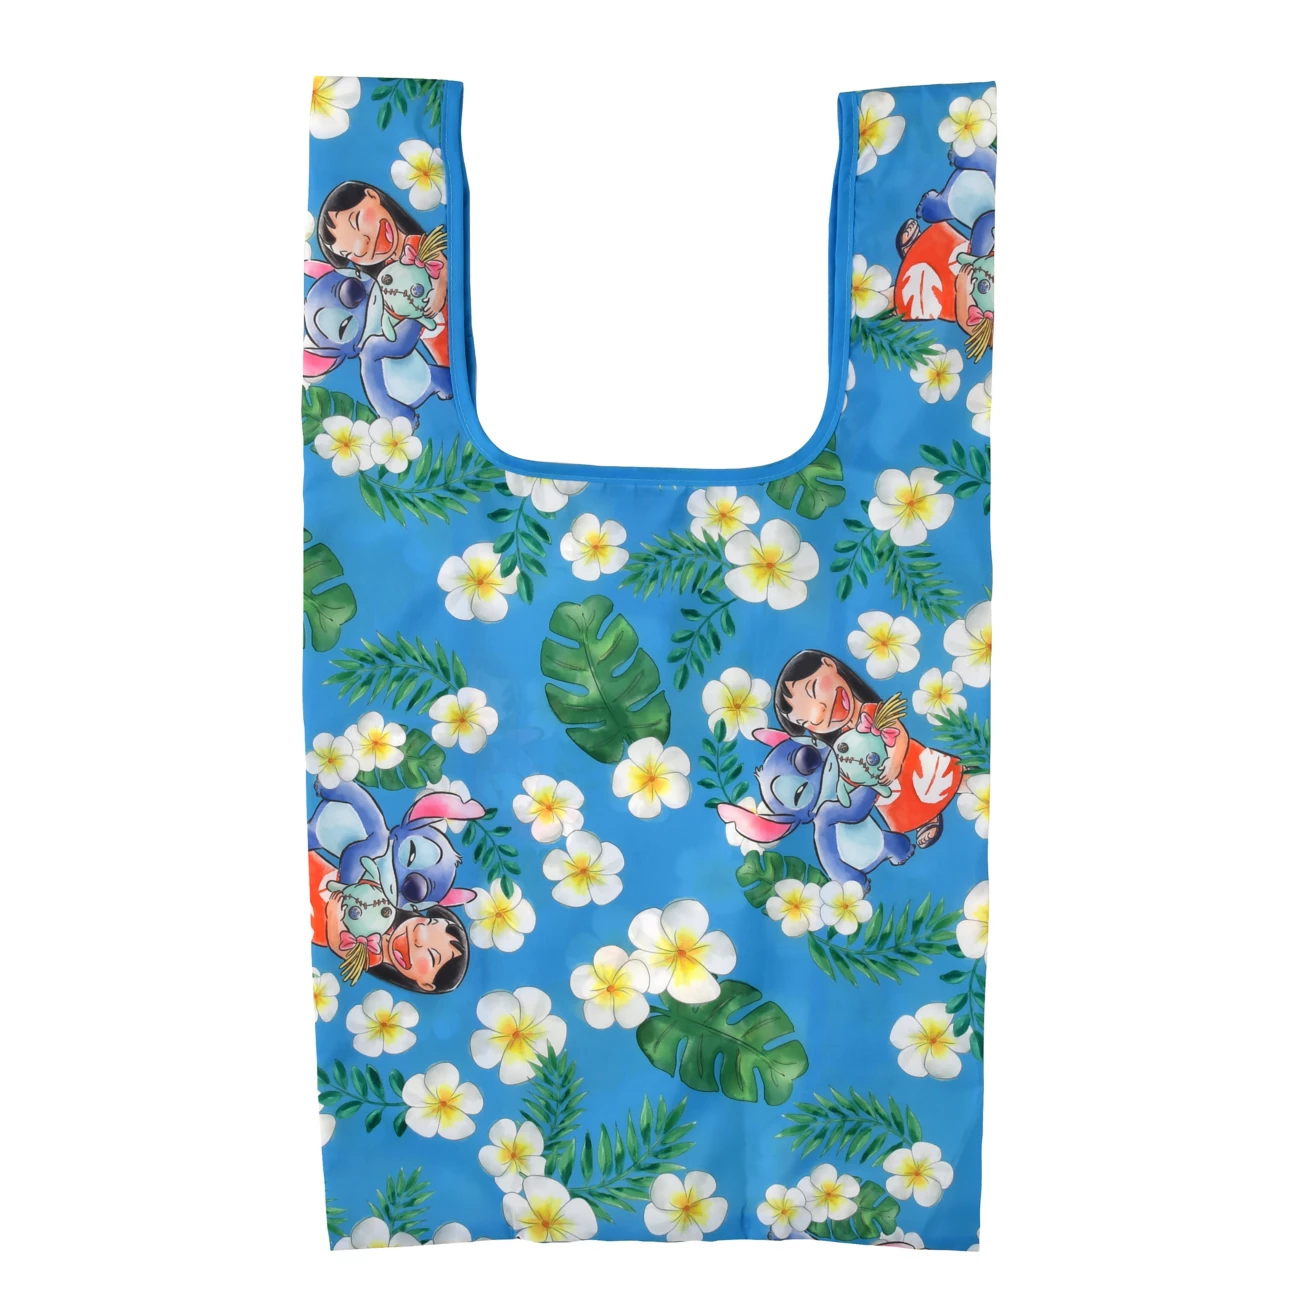 ShopDisney Japan - STITCH 20 YEARS - Eco bag